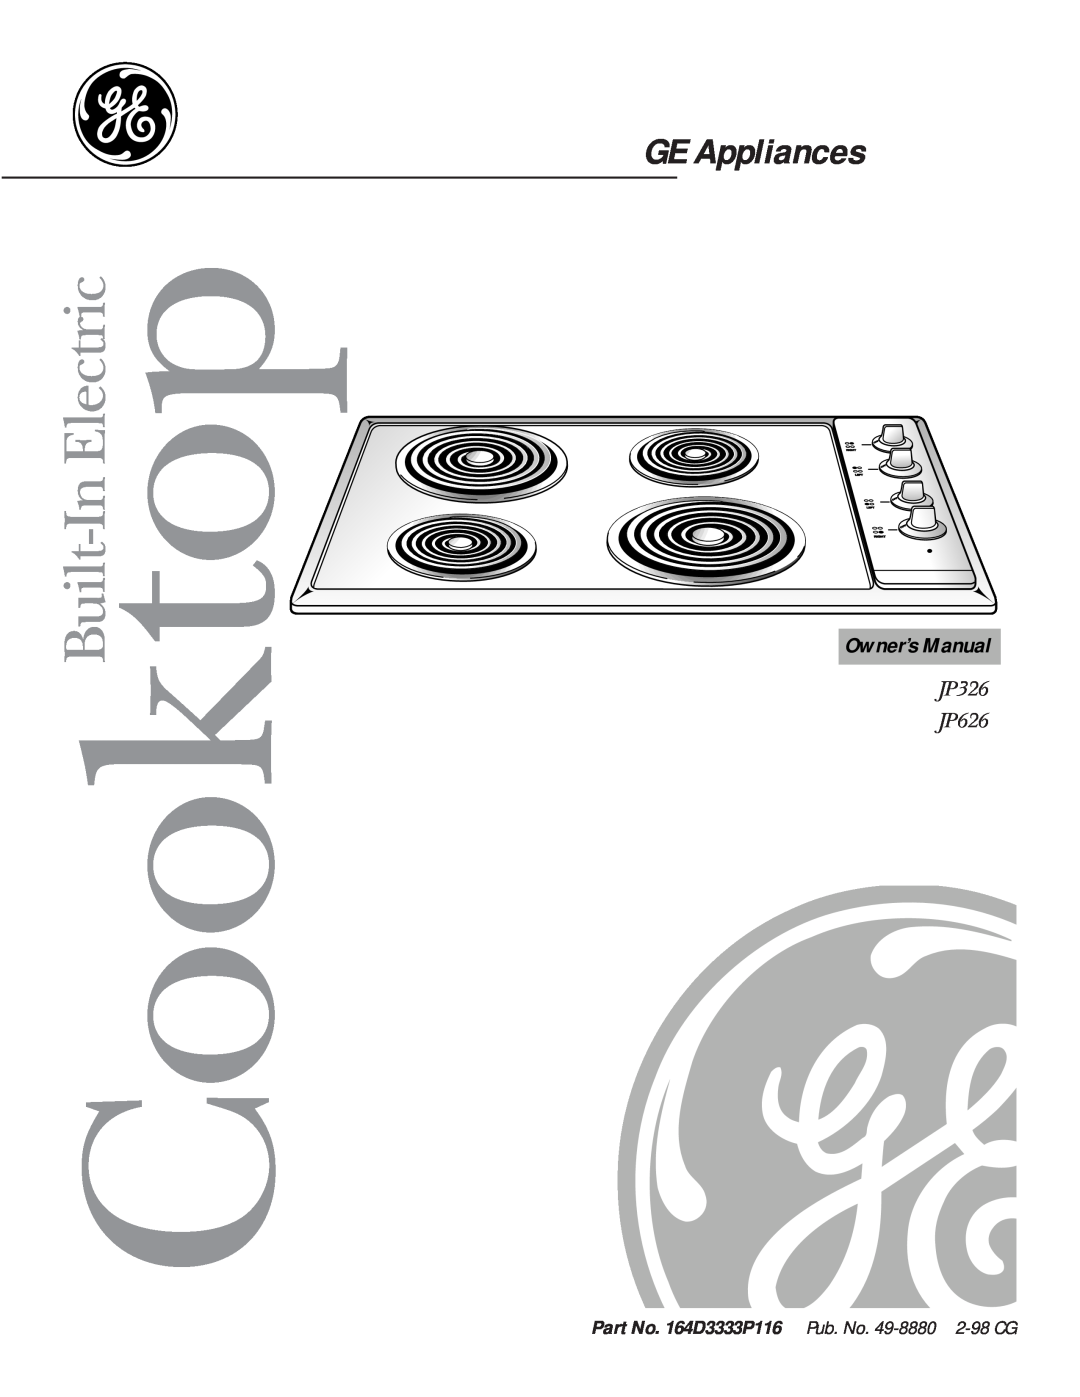 GE owner manual CooktopBuilt-InElectric, GE Appliances, JP326 JP626 